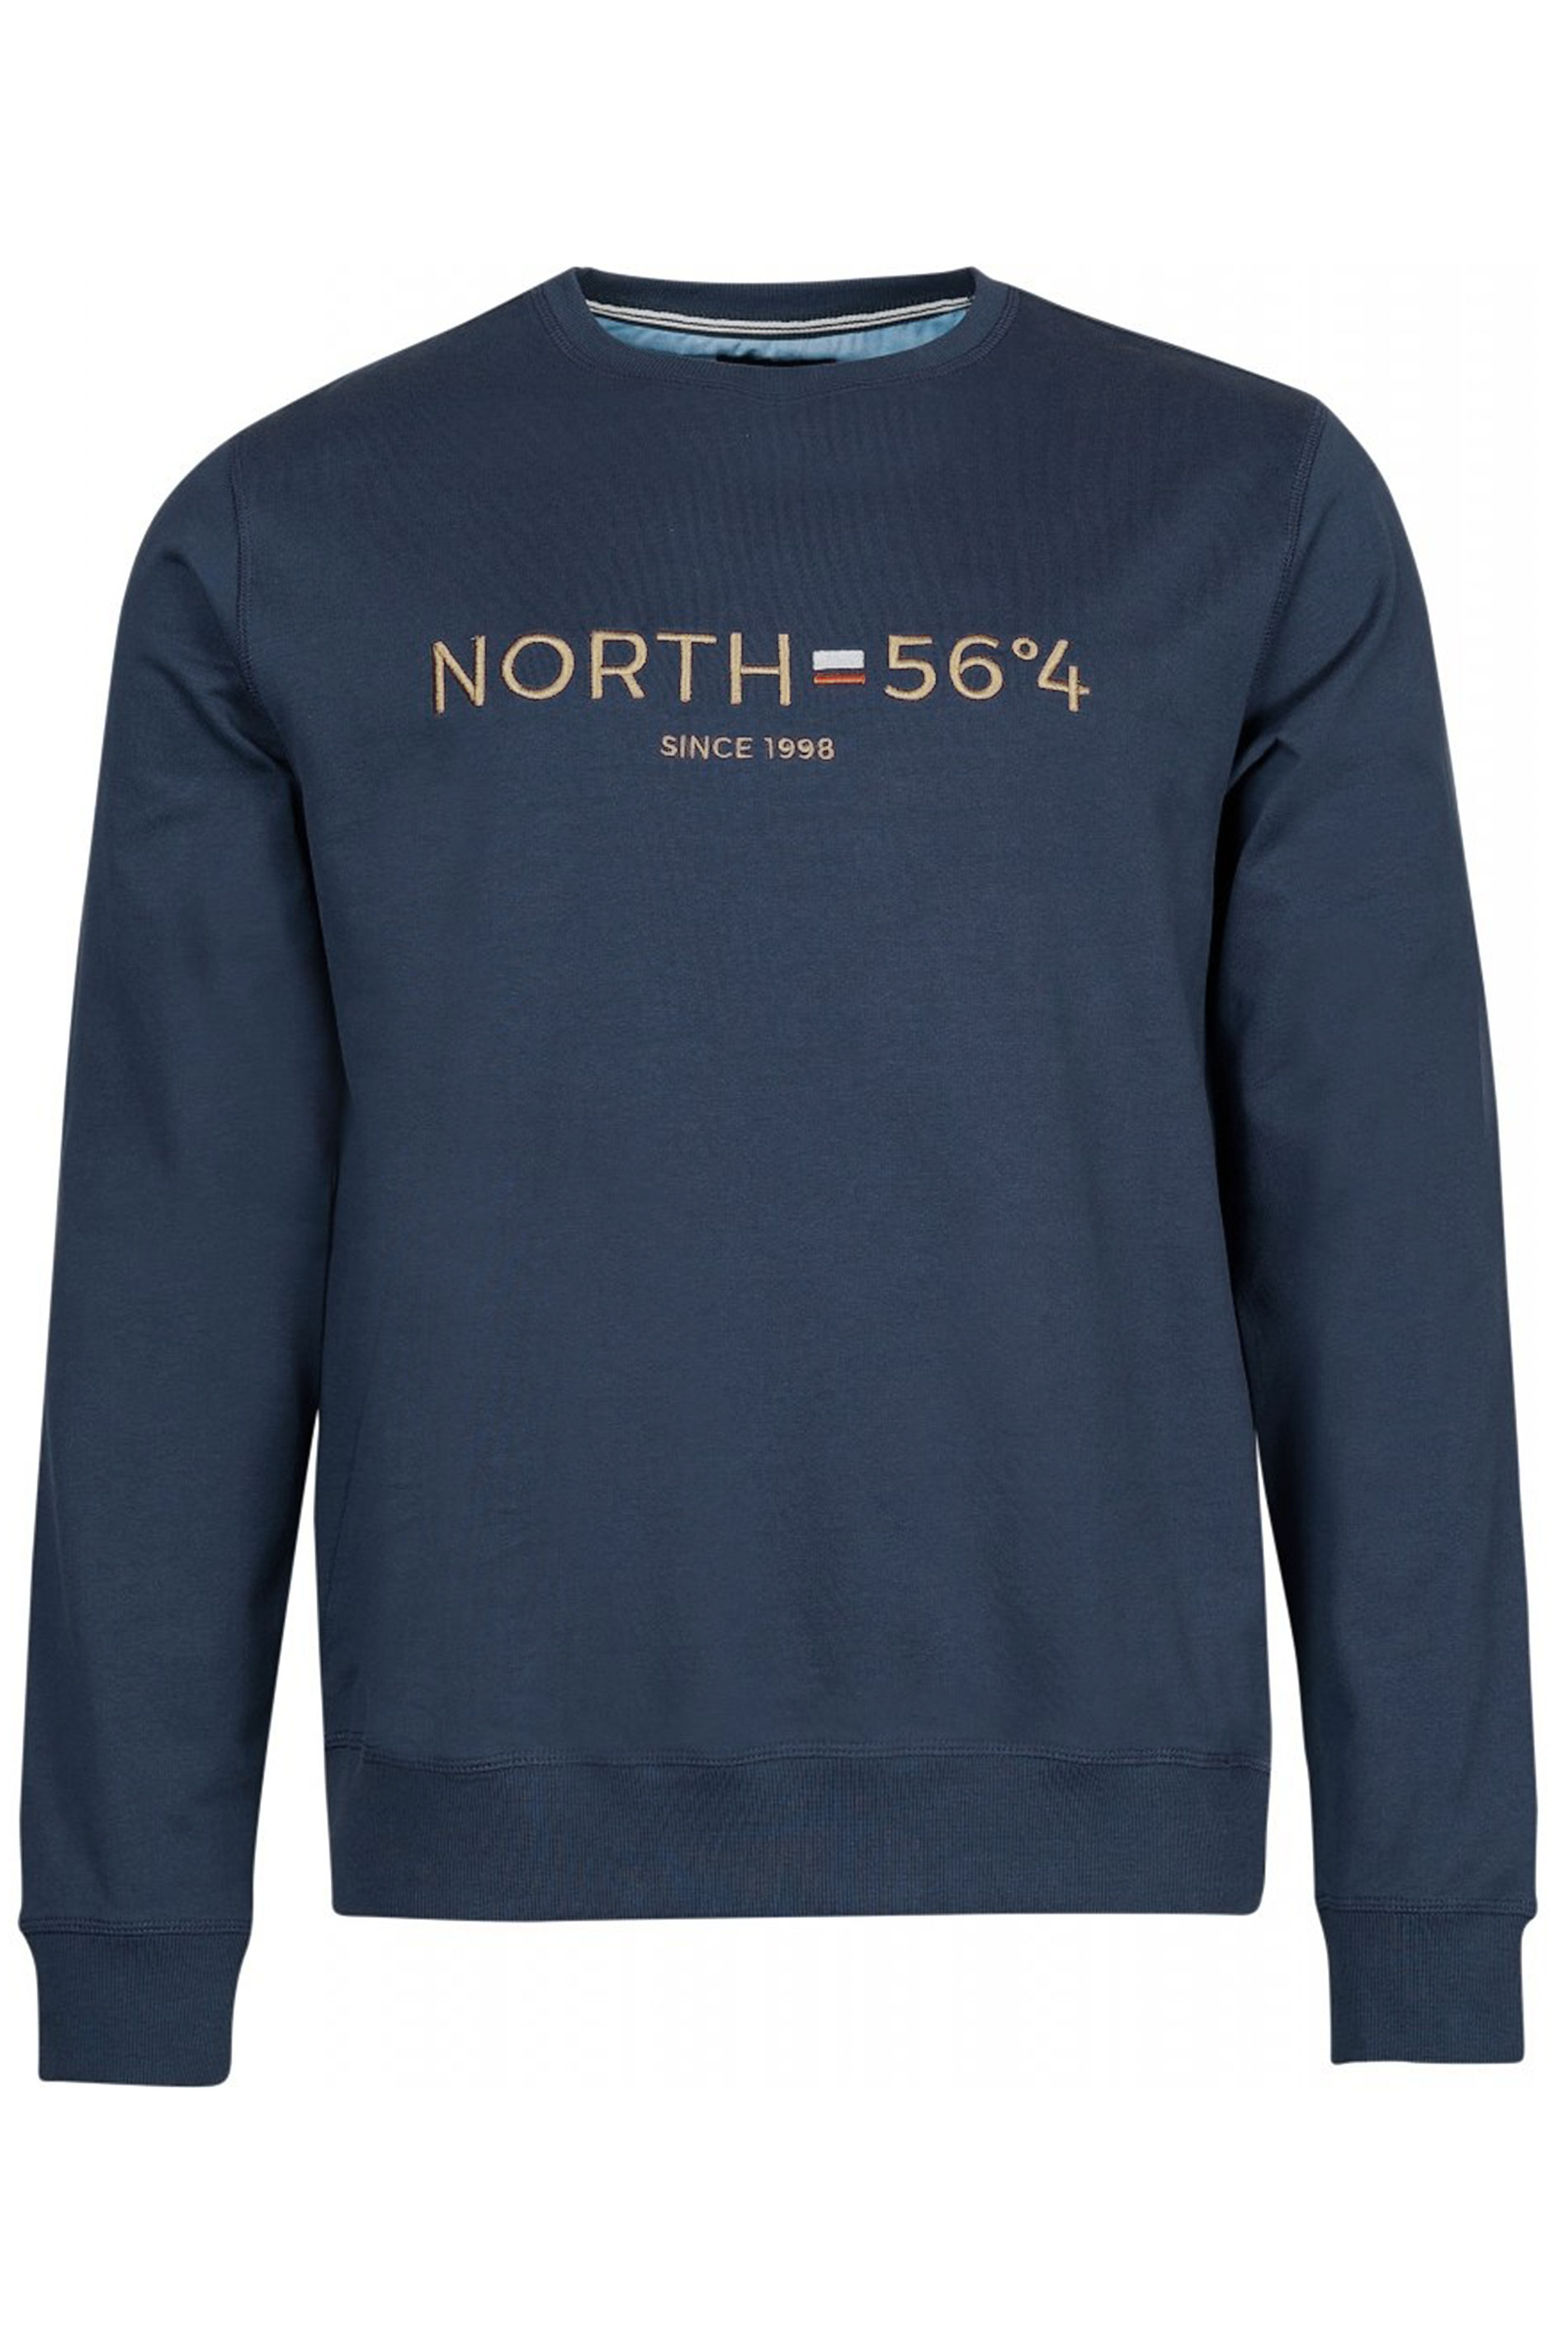 NORTH 56°4 Navy Embroidered Sweatshirt_F.jpg